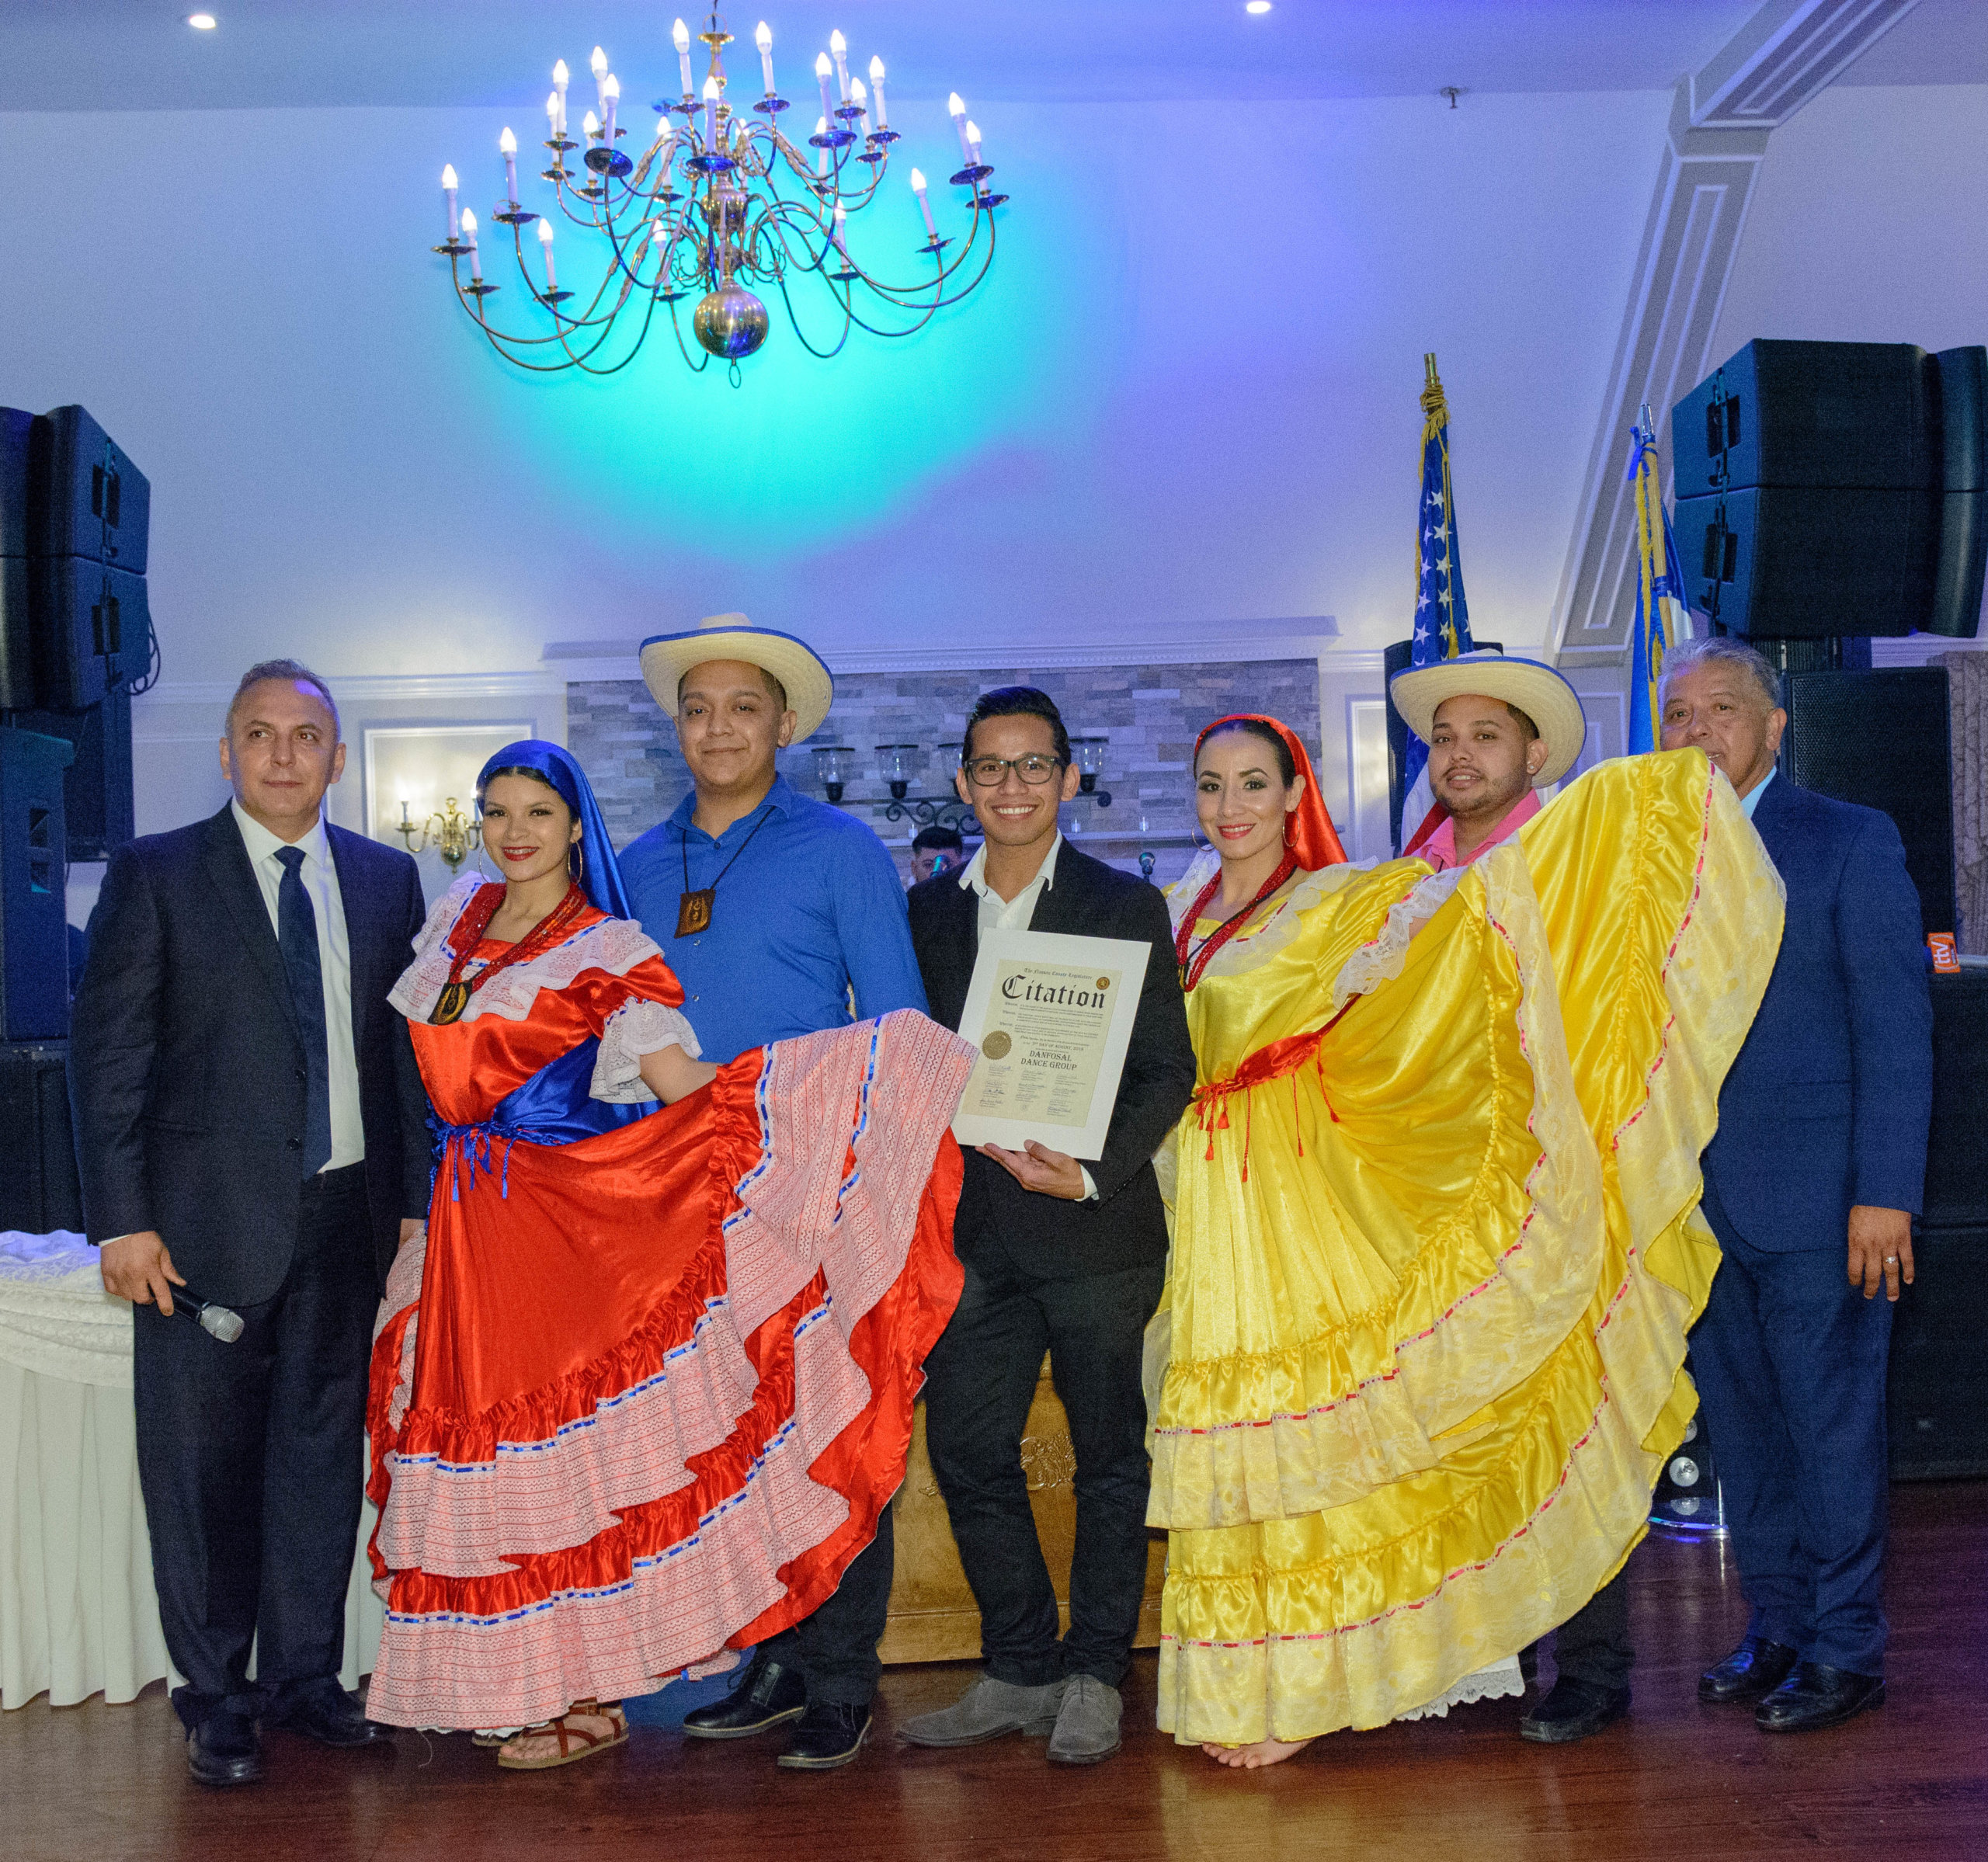 Gala 'Orgullosamente Salvadoreño 2018' rinde homenaje a inmigrantes destacados